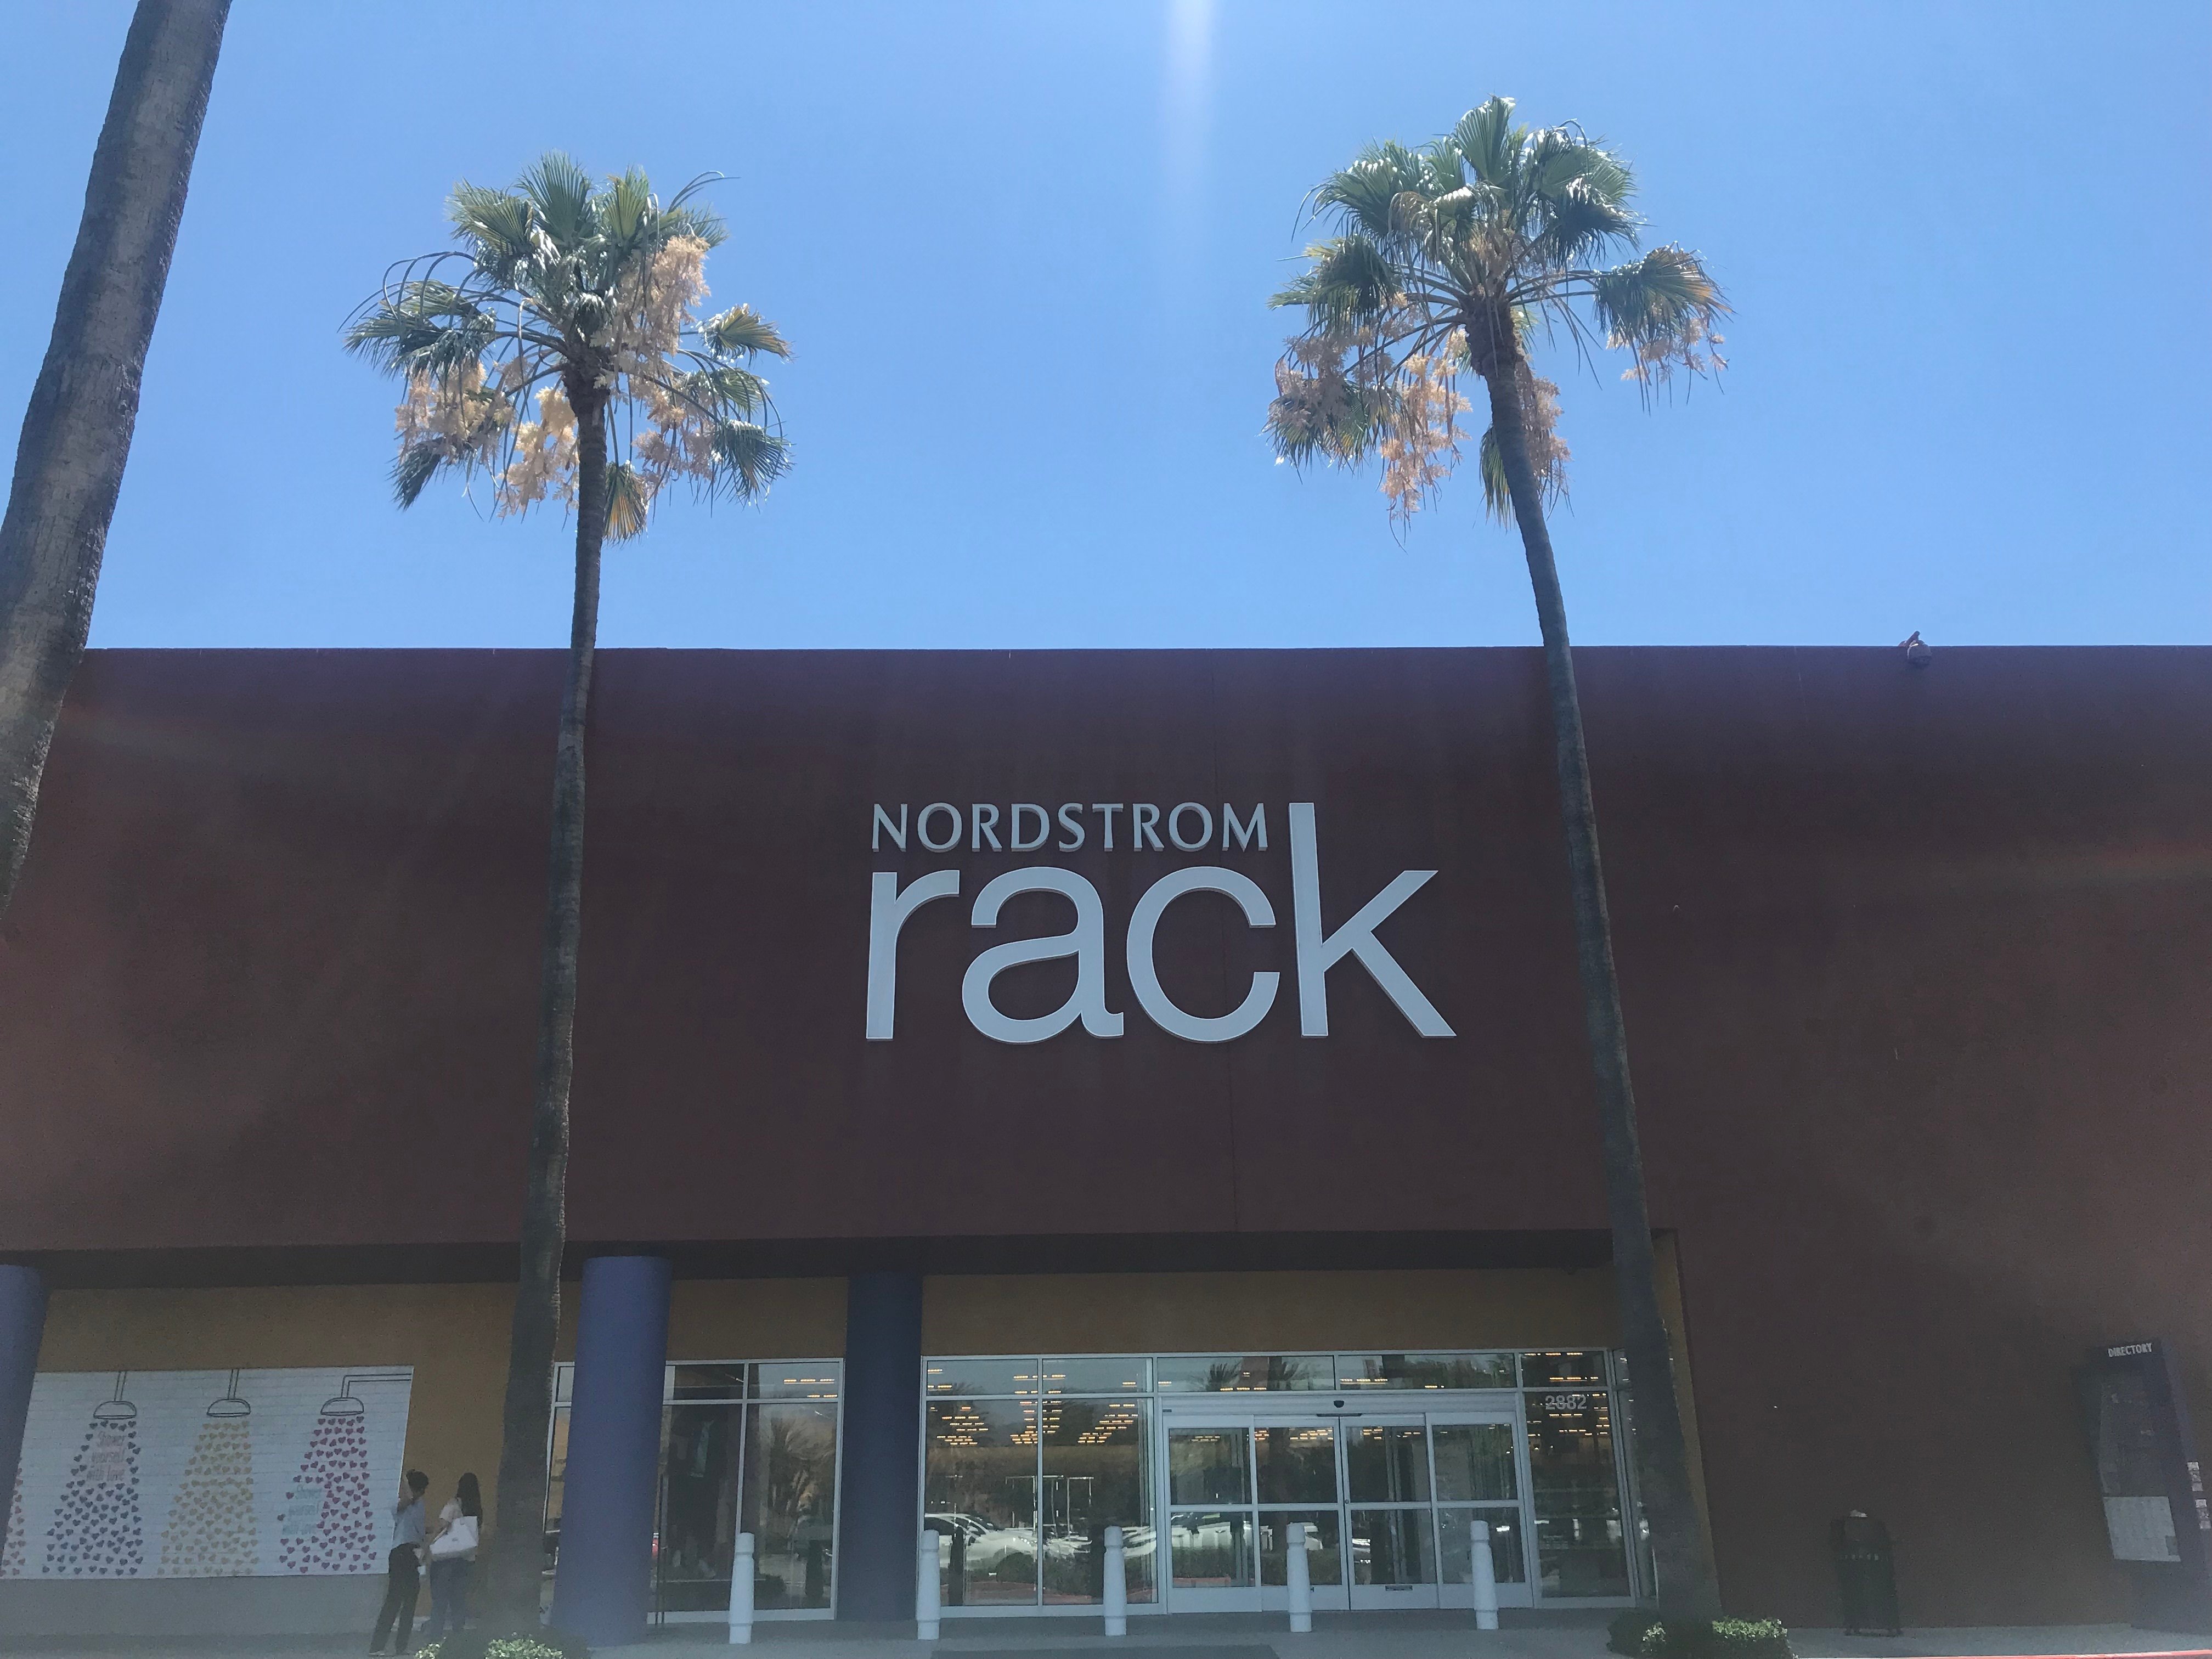 Nordstrom Rack at Anaheim Hills Festival